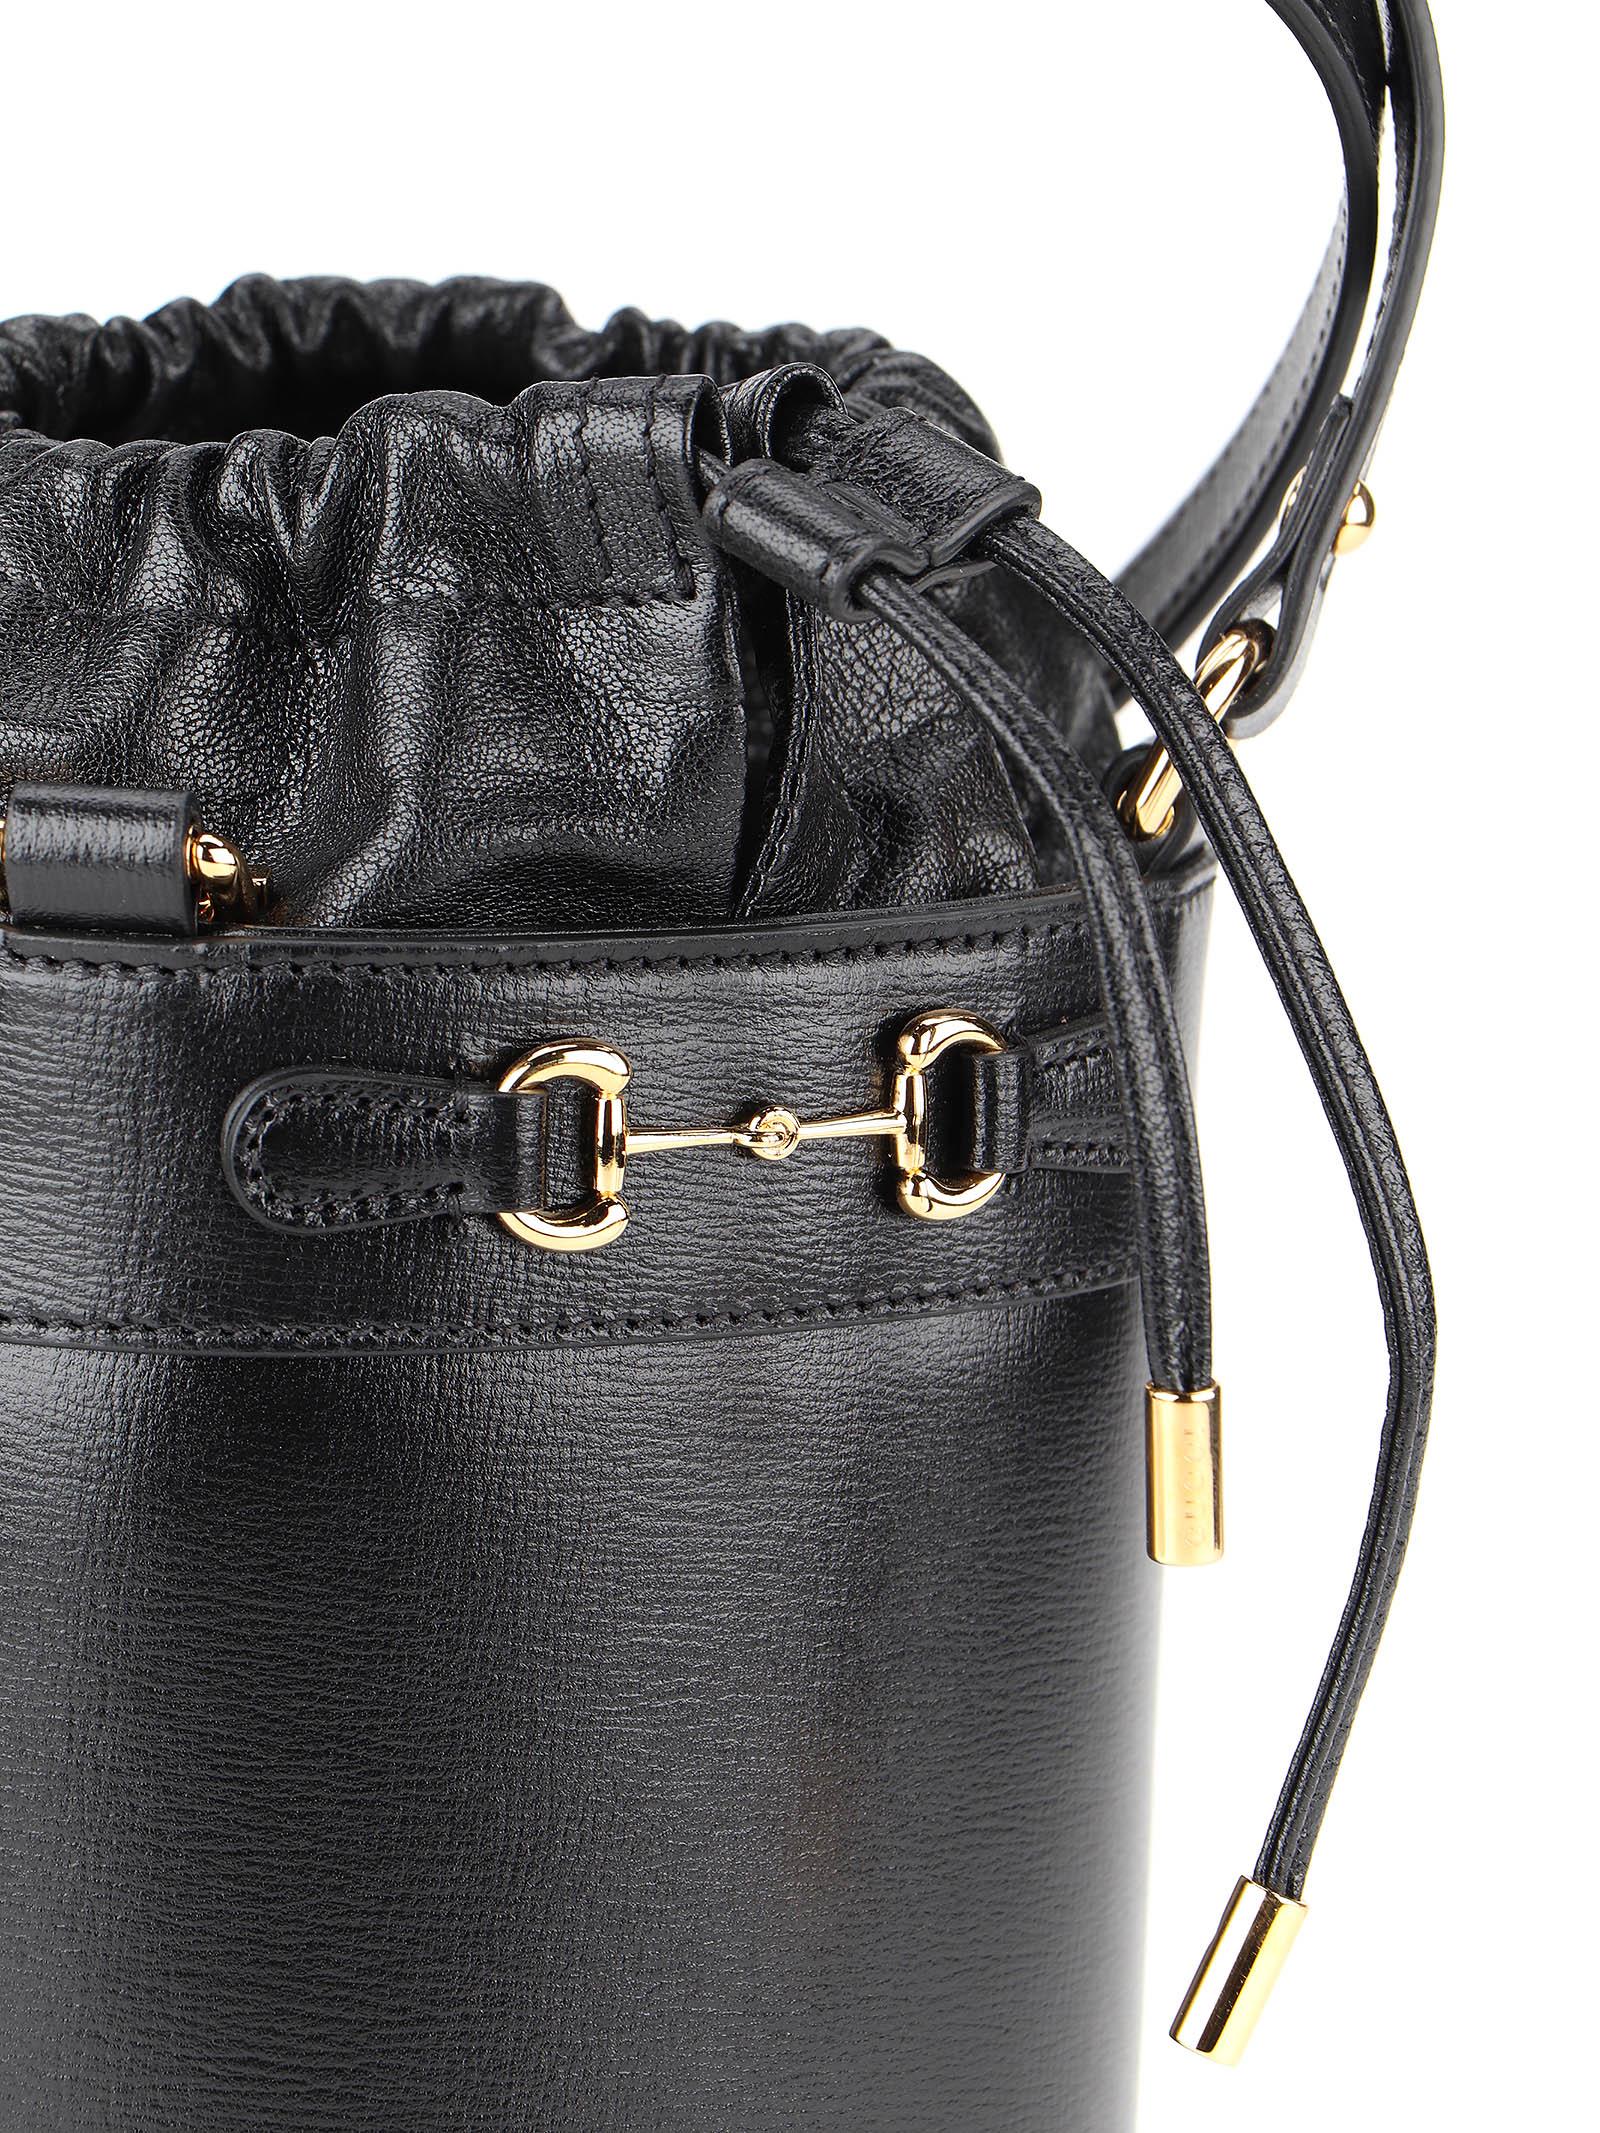 Gucci Leather 1955 Horsebit Bag in Black - Lyst